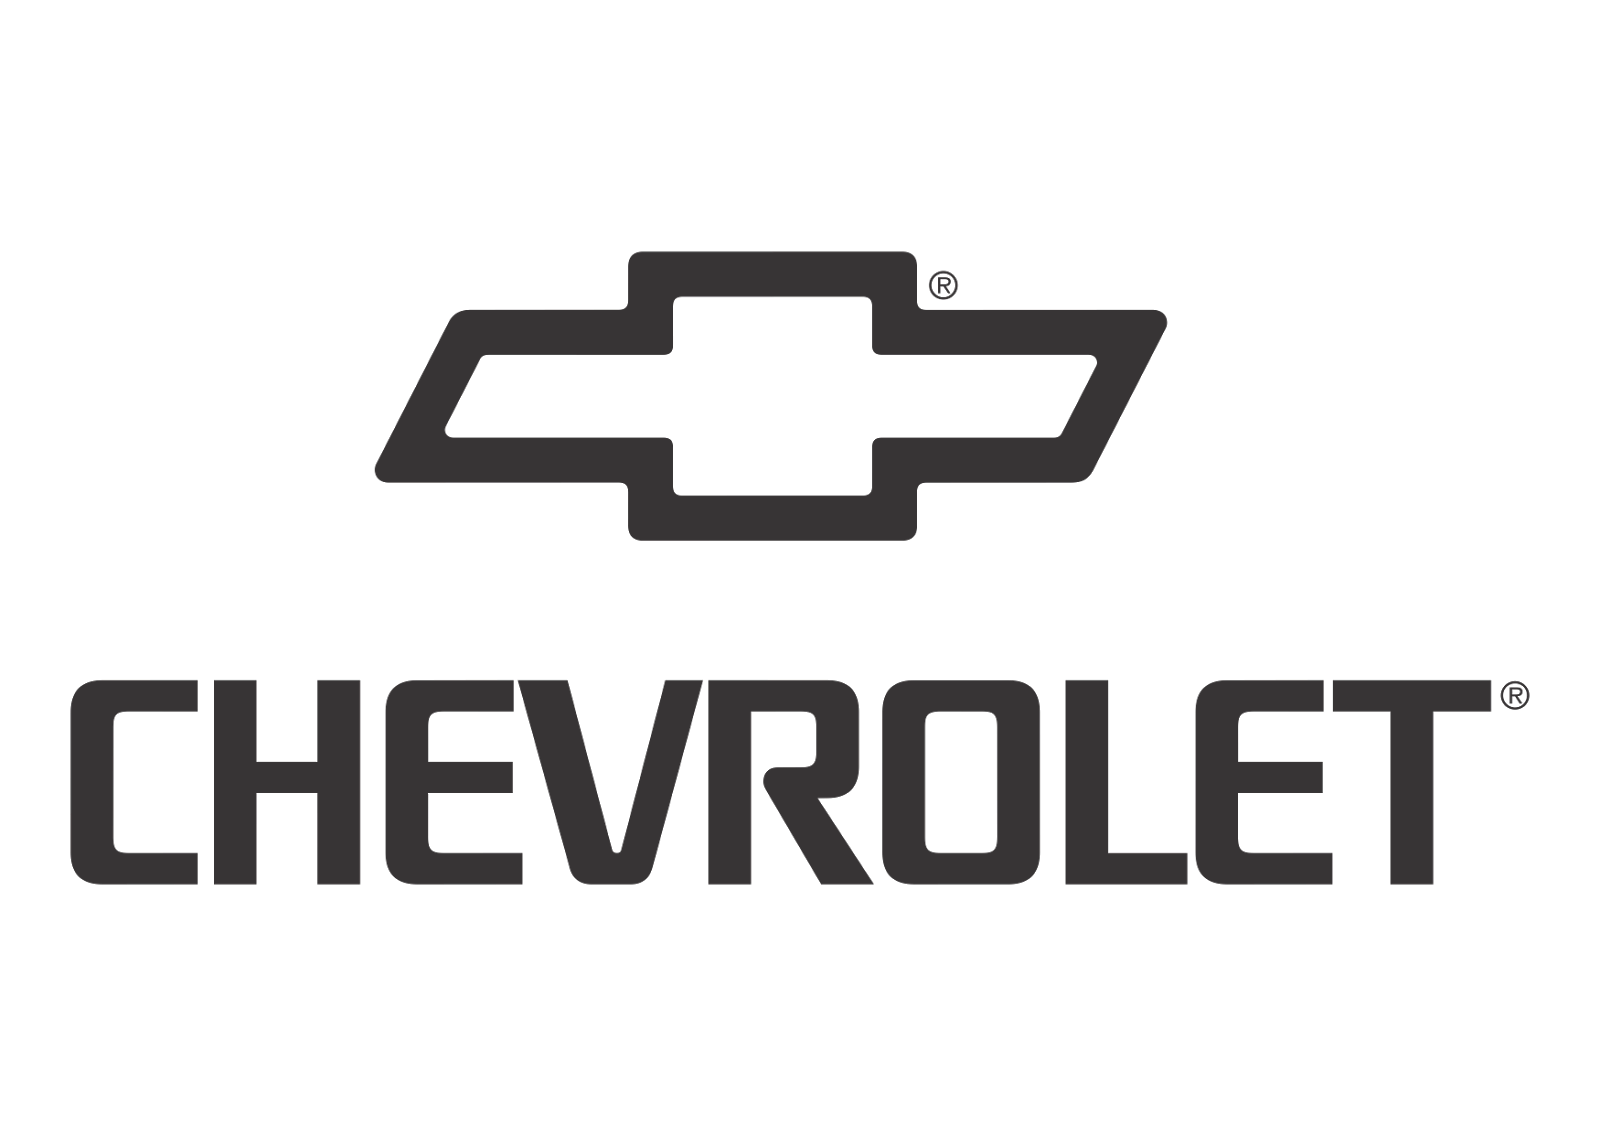 Chevrolet Logo PNG HD Image